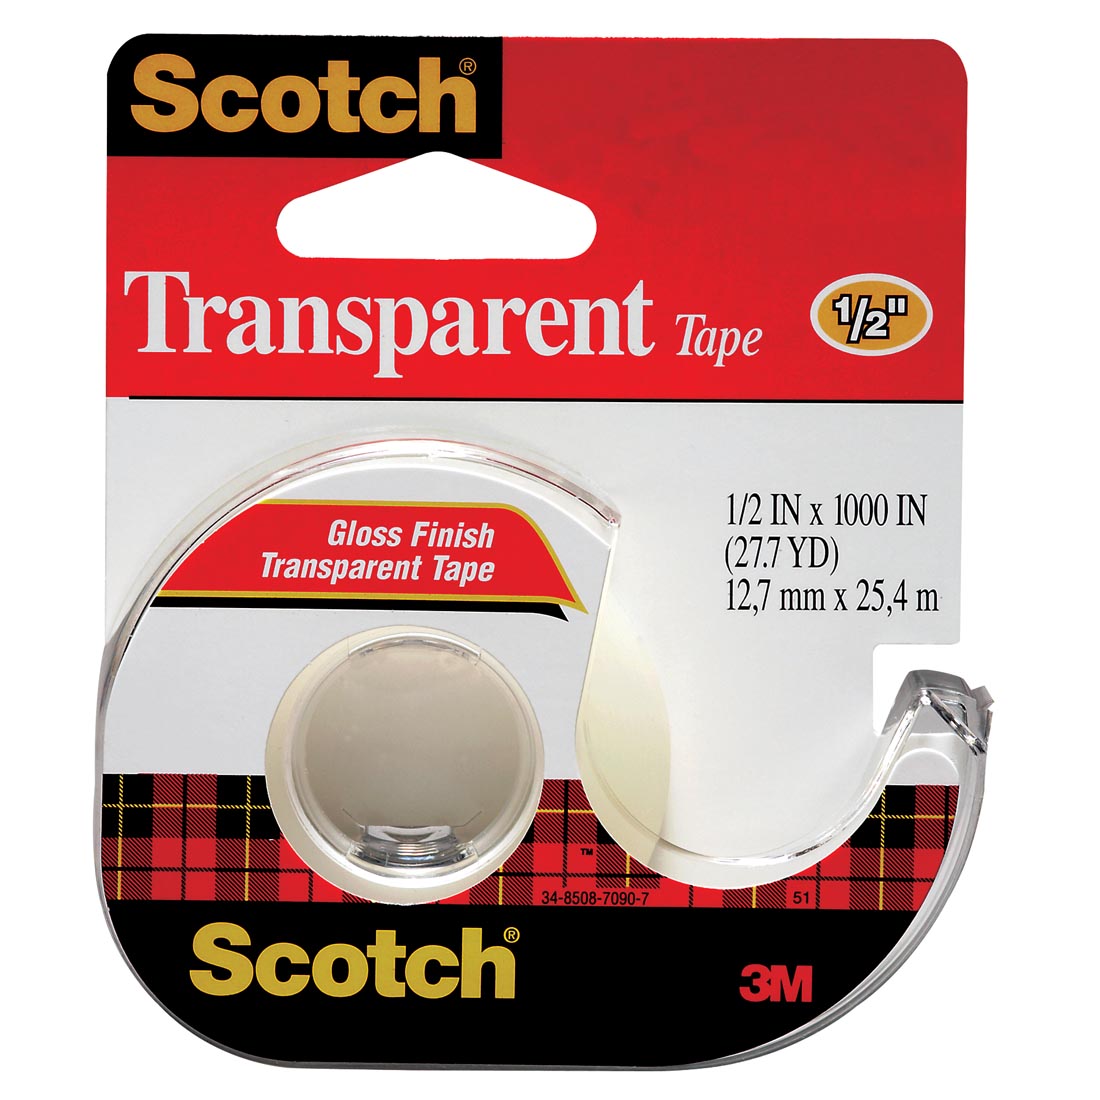 Scotch #600 Transparent Tape Dispenser, 1/2 x 1000" roll